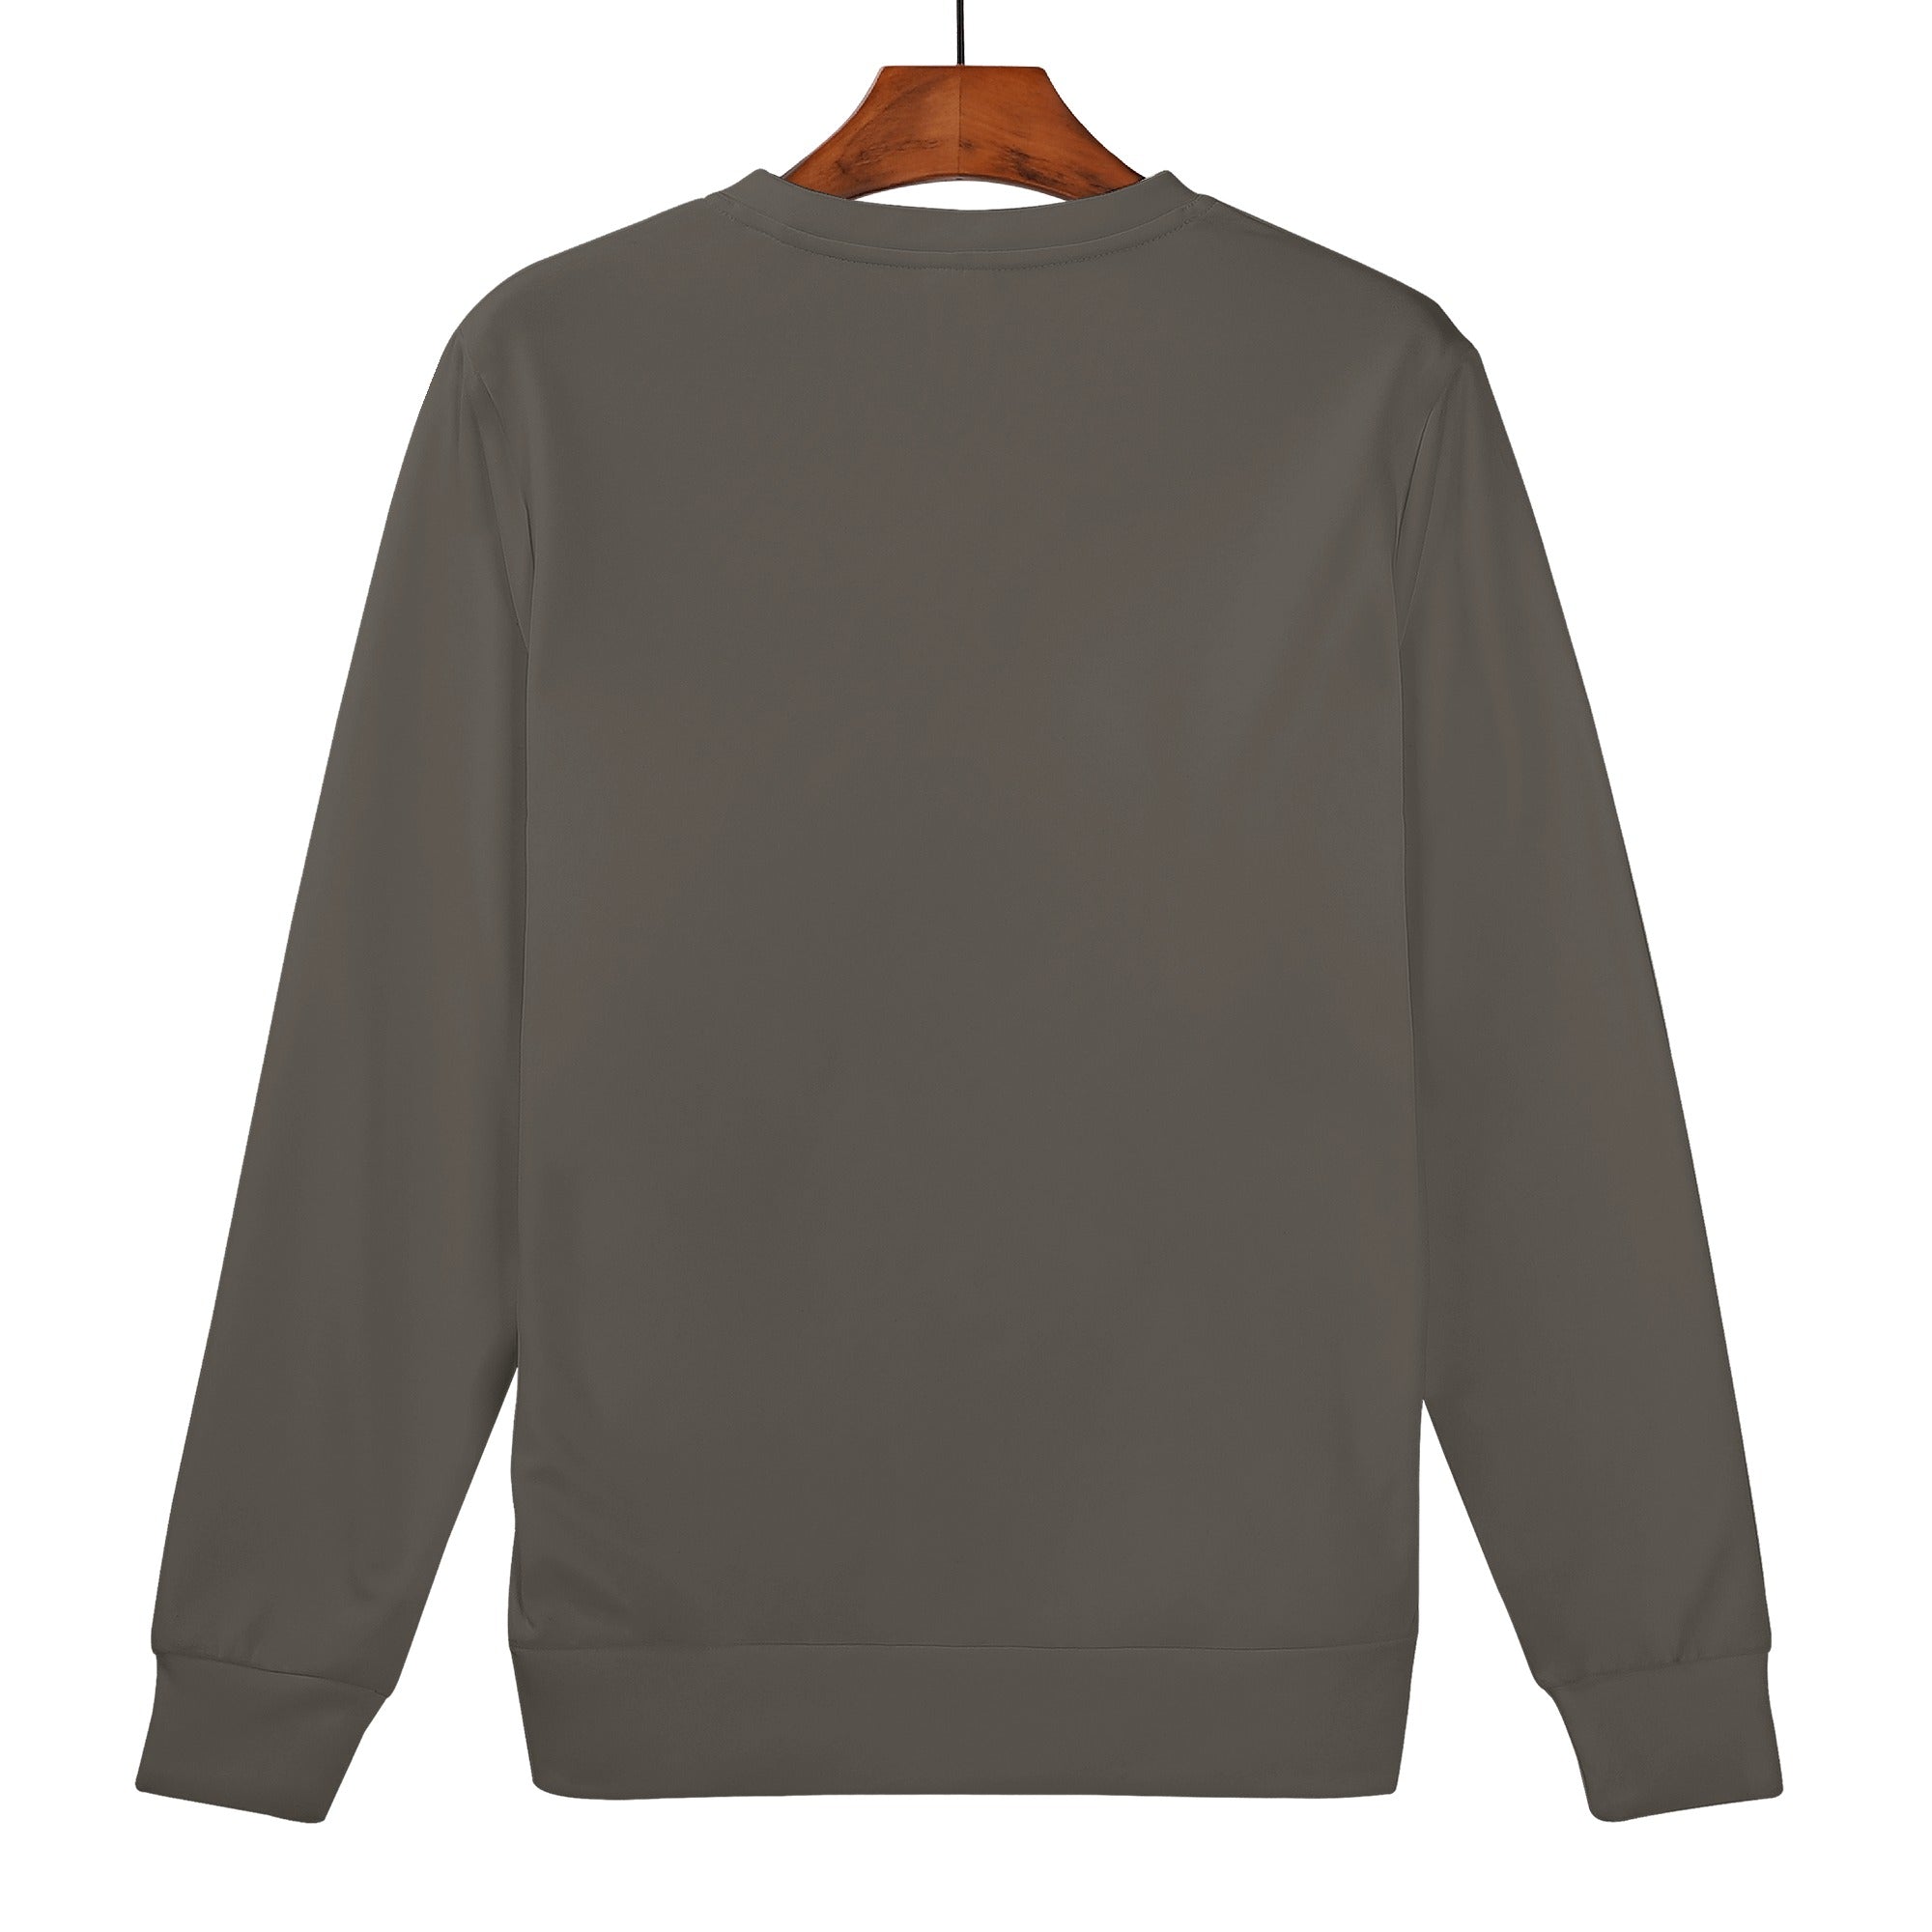 BlackSheep Sweater - Kanivee Customs